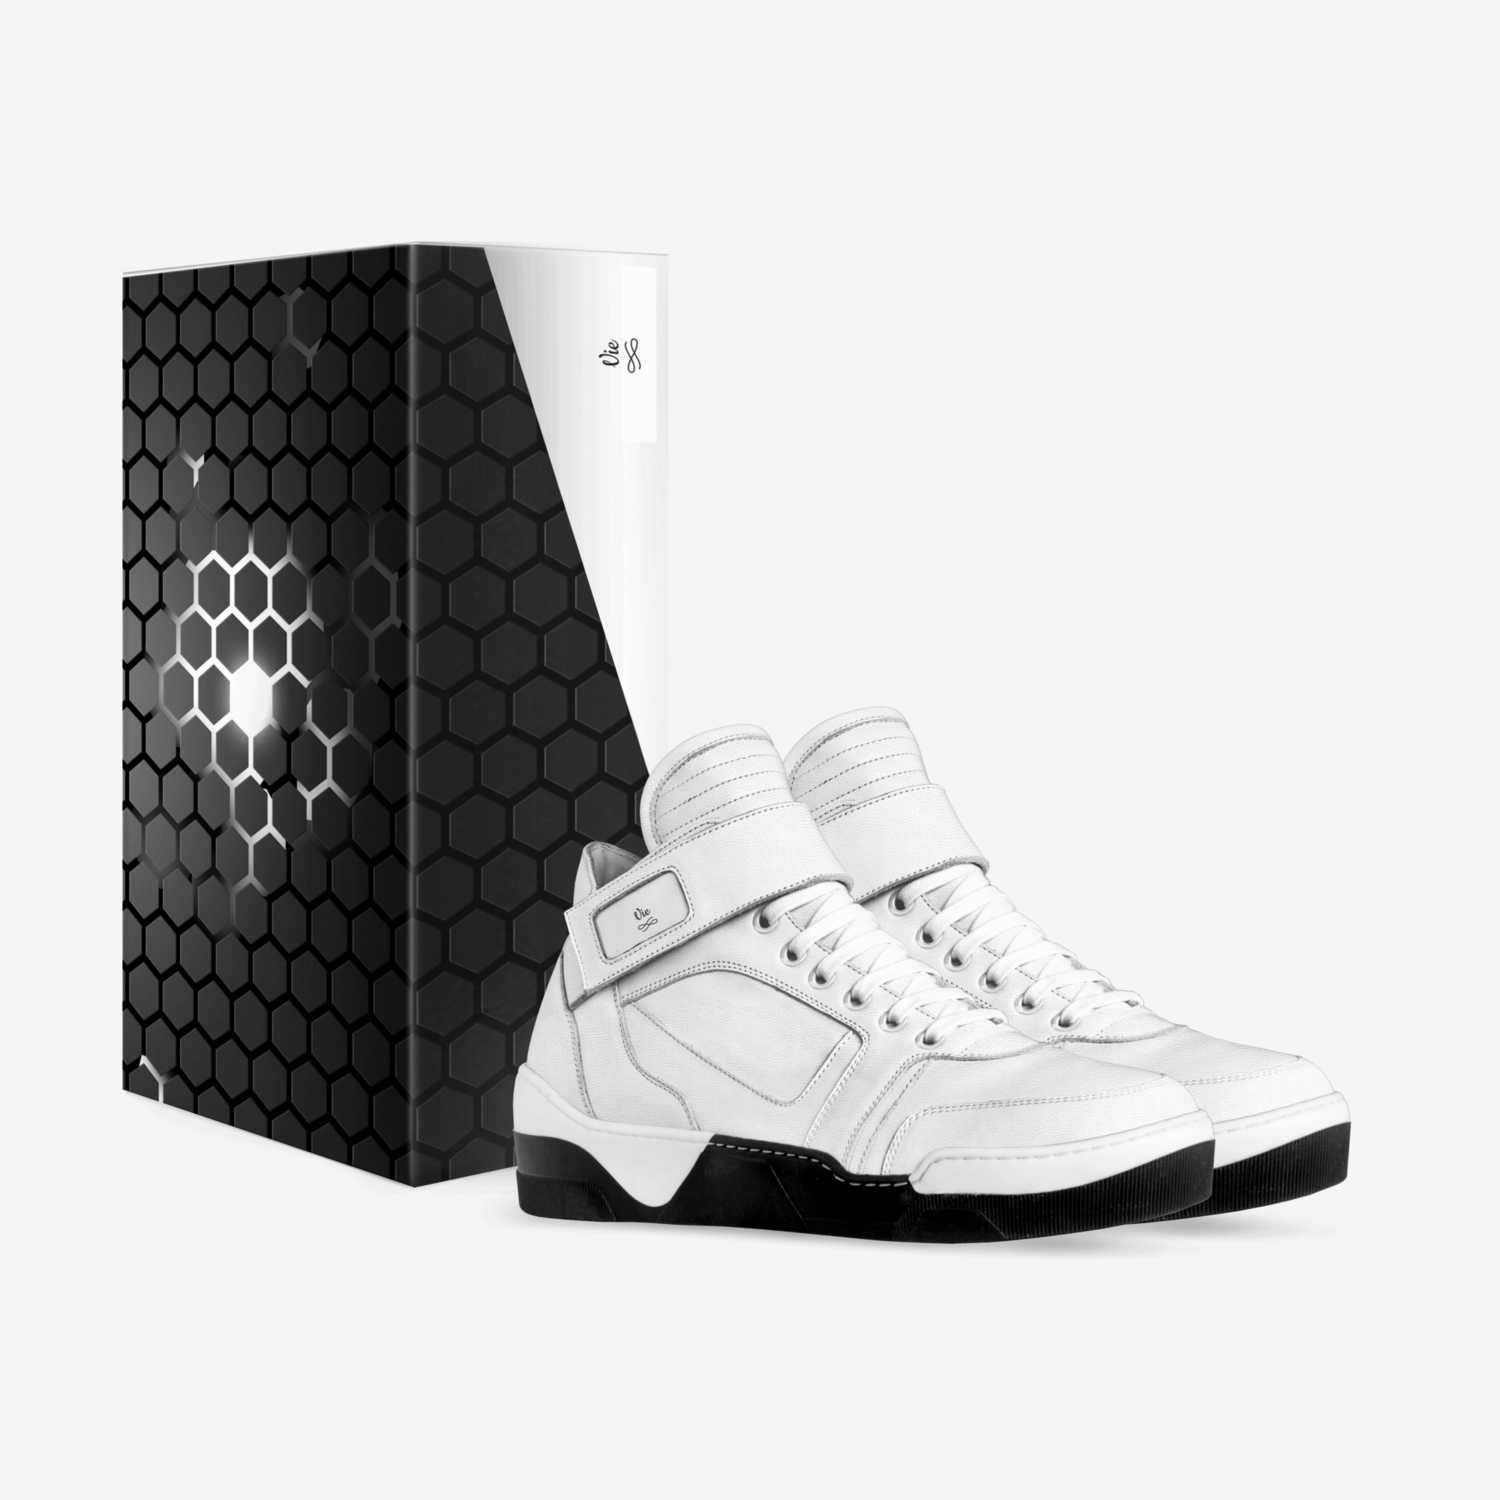 Vie custom made in Italy shoes by Henrik Vikebø | Box view